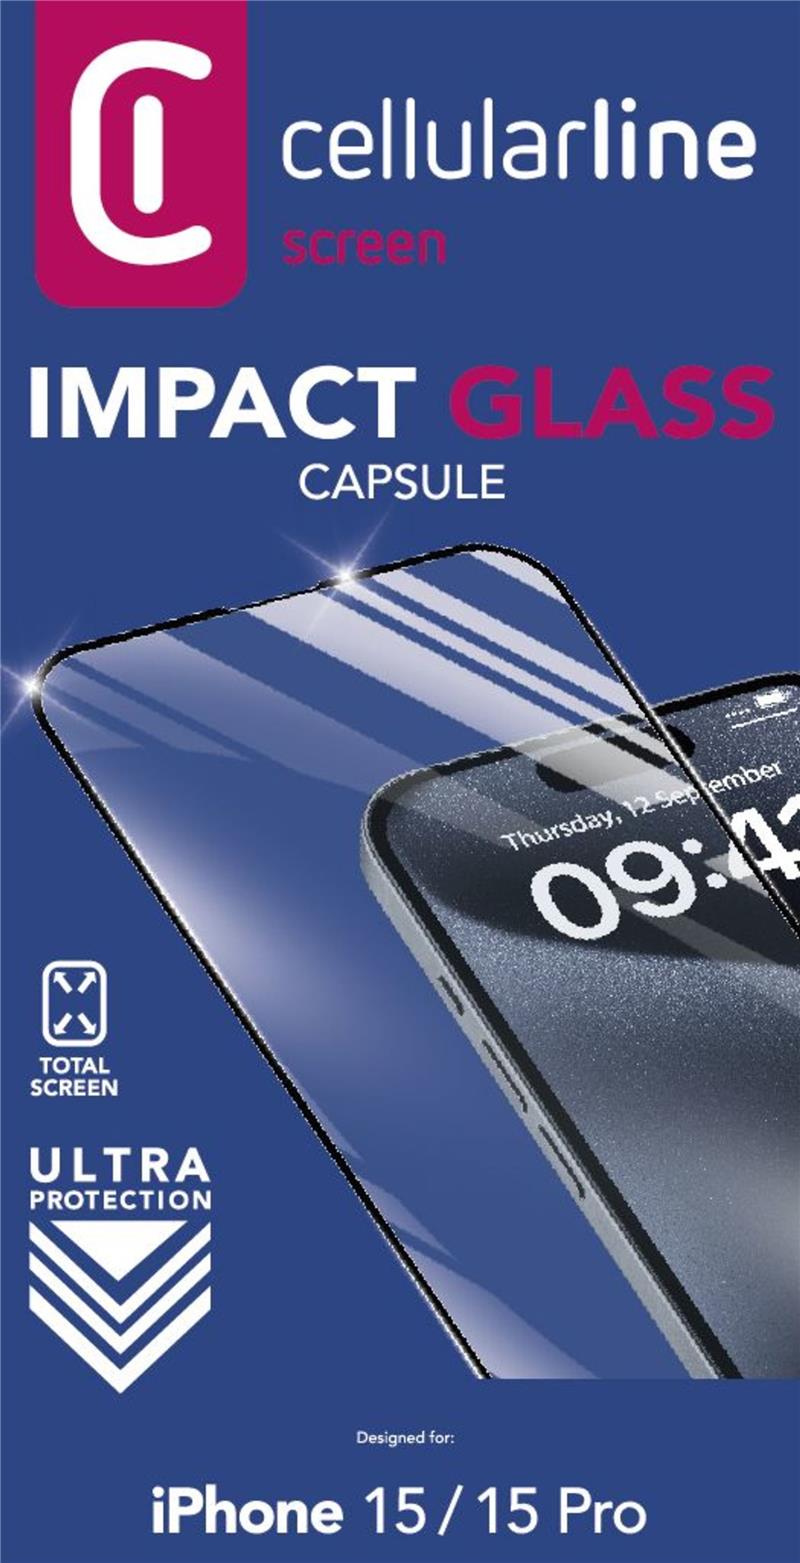 Cellularline - Impact Glass Capsule